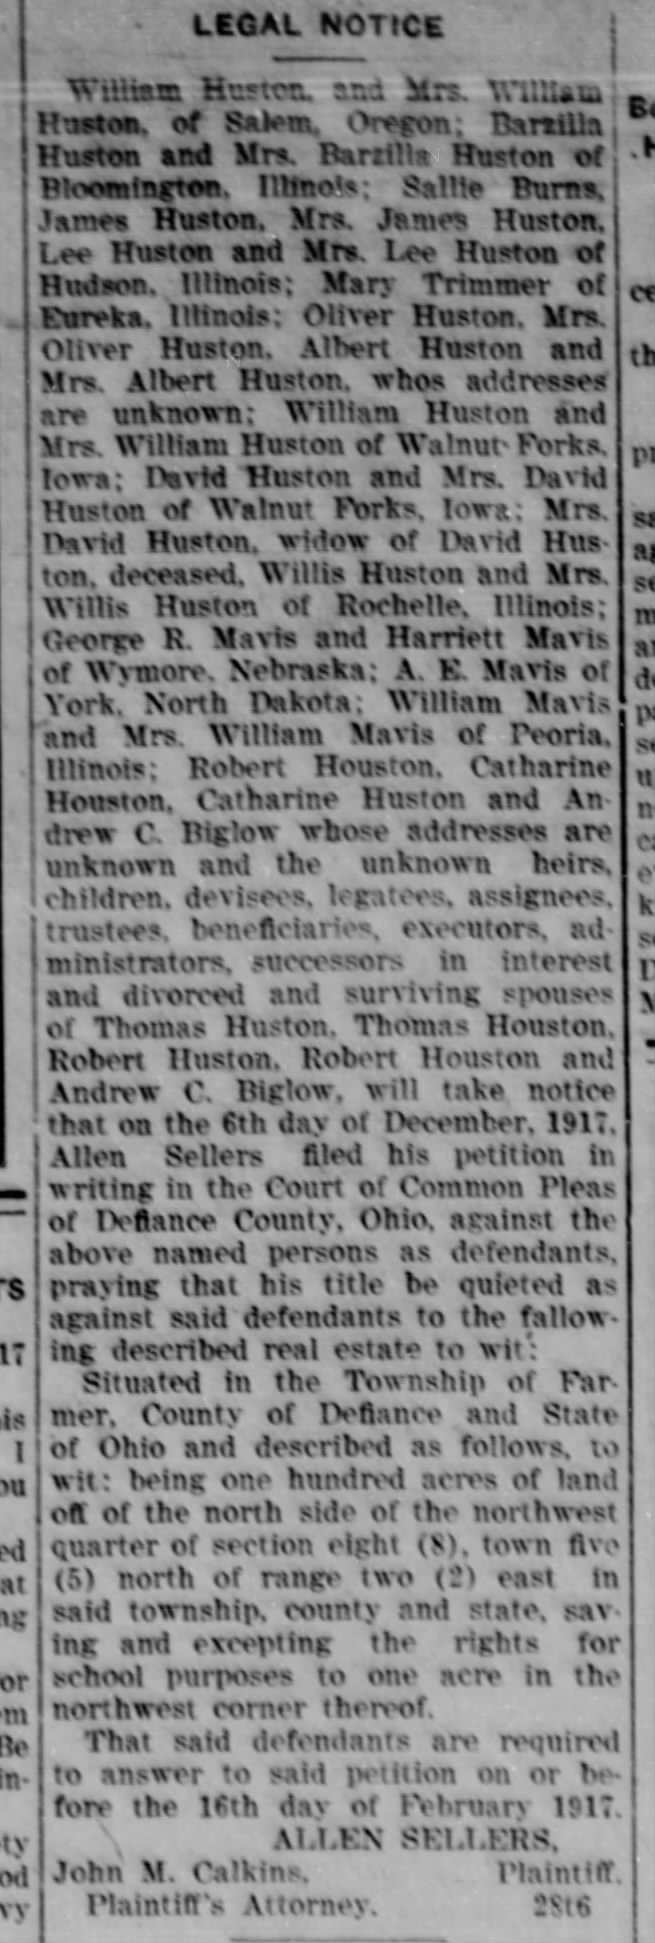 The Tribune -- Hicksville, Ohio, 13 December 1917, mention of George and Harriette Mavis